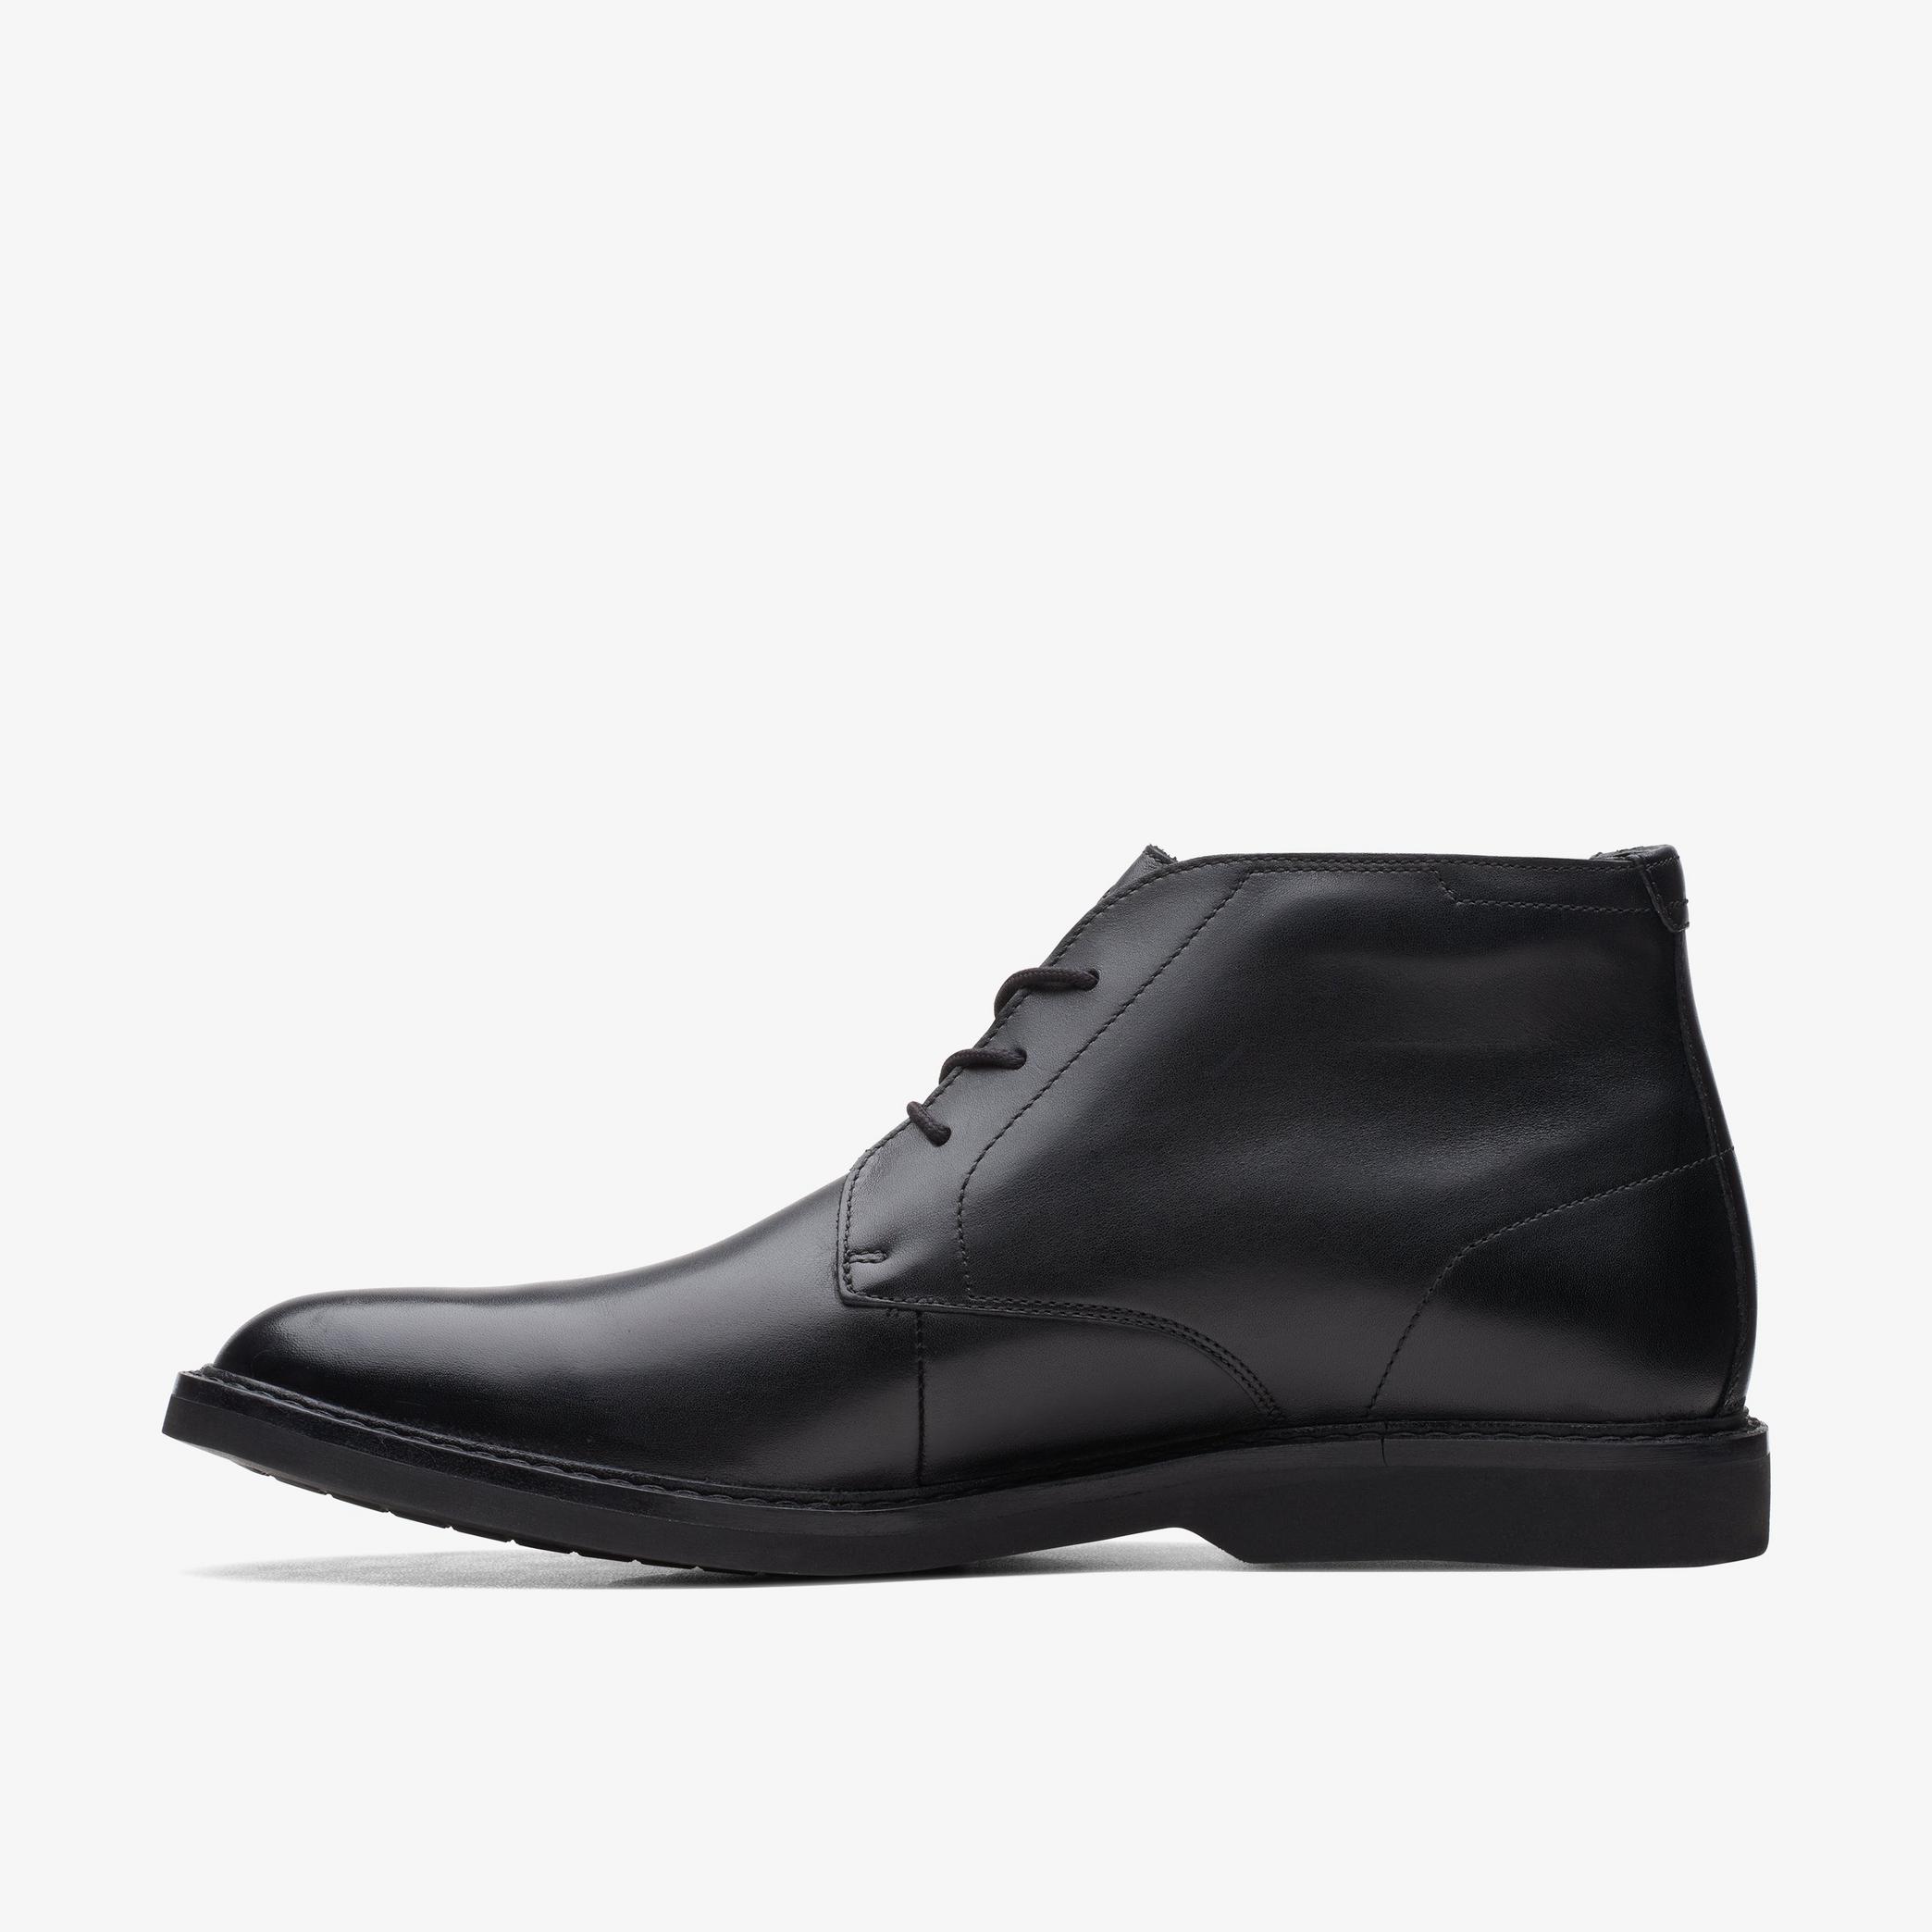 MENS Atticus LT Hi GORE-TEX Black Leather Ankle Boots | Clarks UK